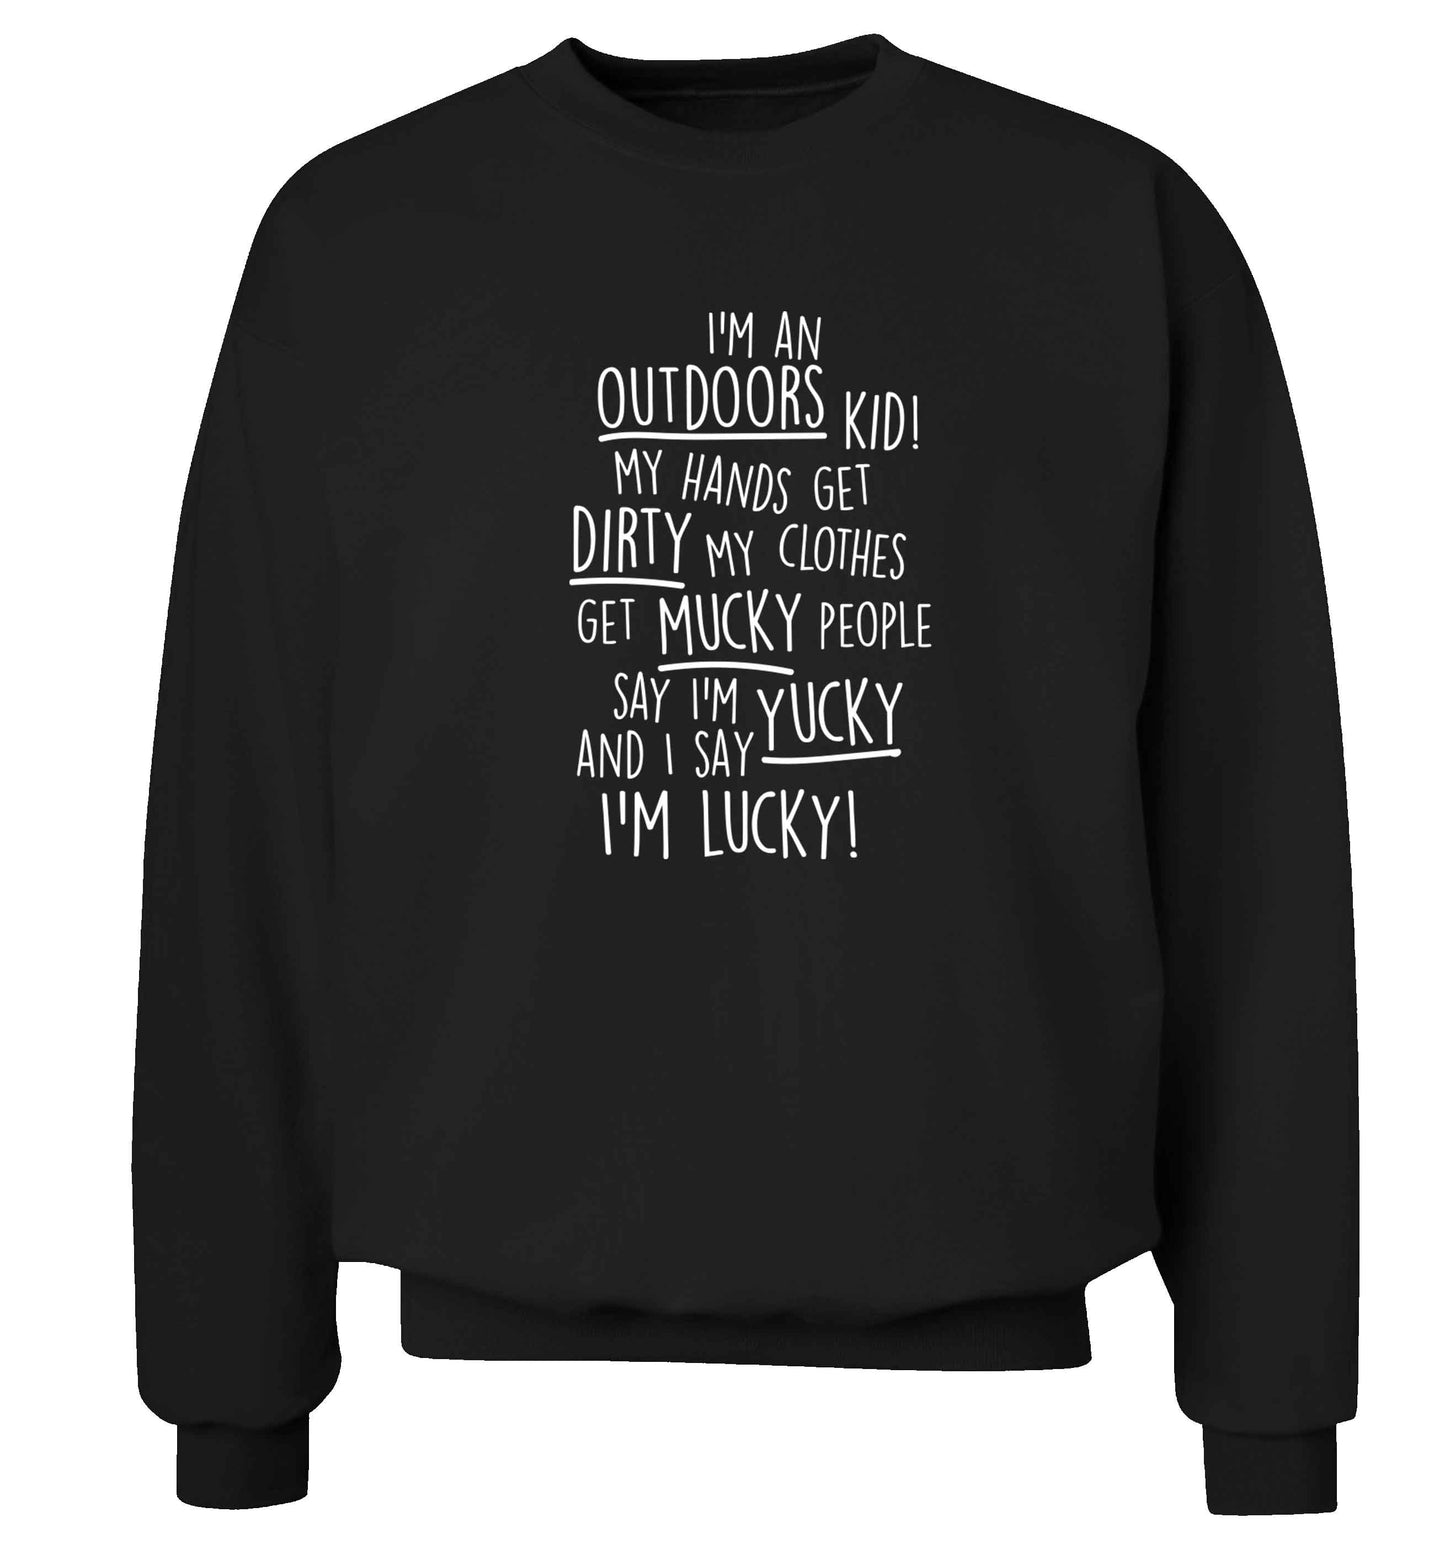 I'm an outdoors kid poem Adult's unisex black Sweater 2XL